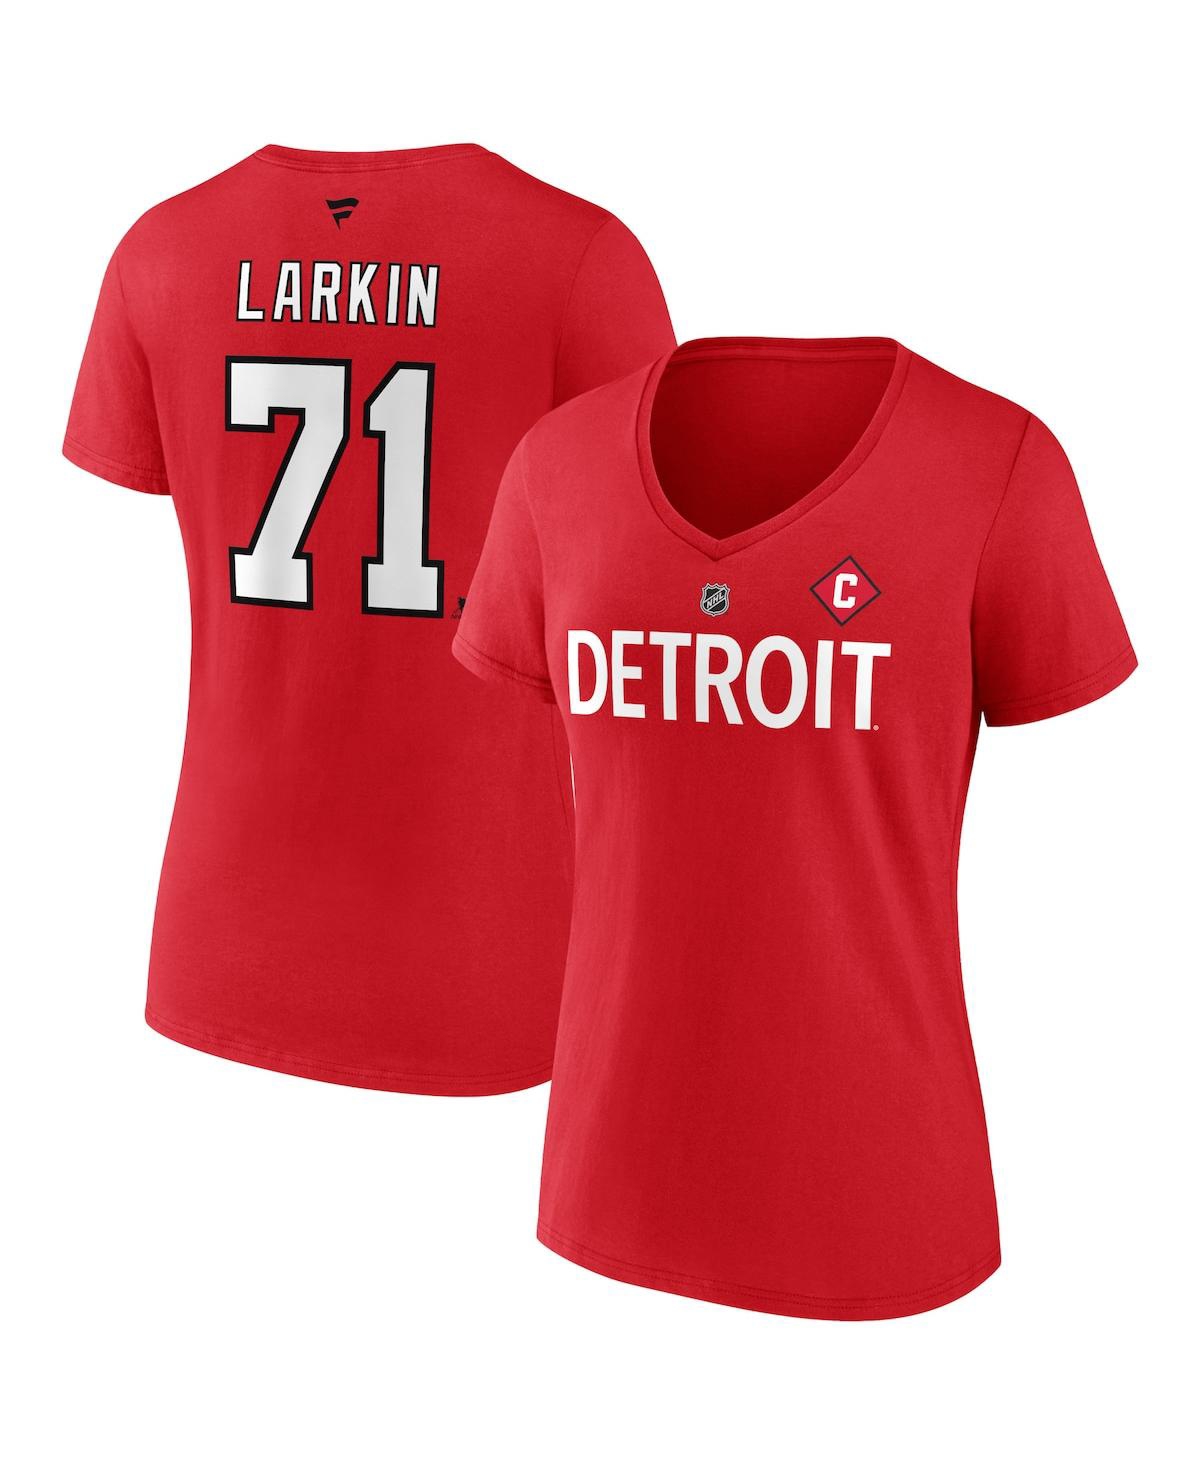 Women's Fanatics Branded Red Washington Capitals Any Name & Number Playmaker V-Neck Long Sleeve T-Shirt Size: Medium